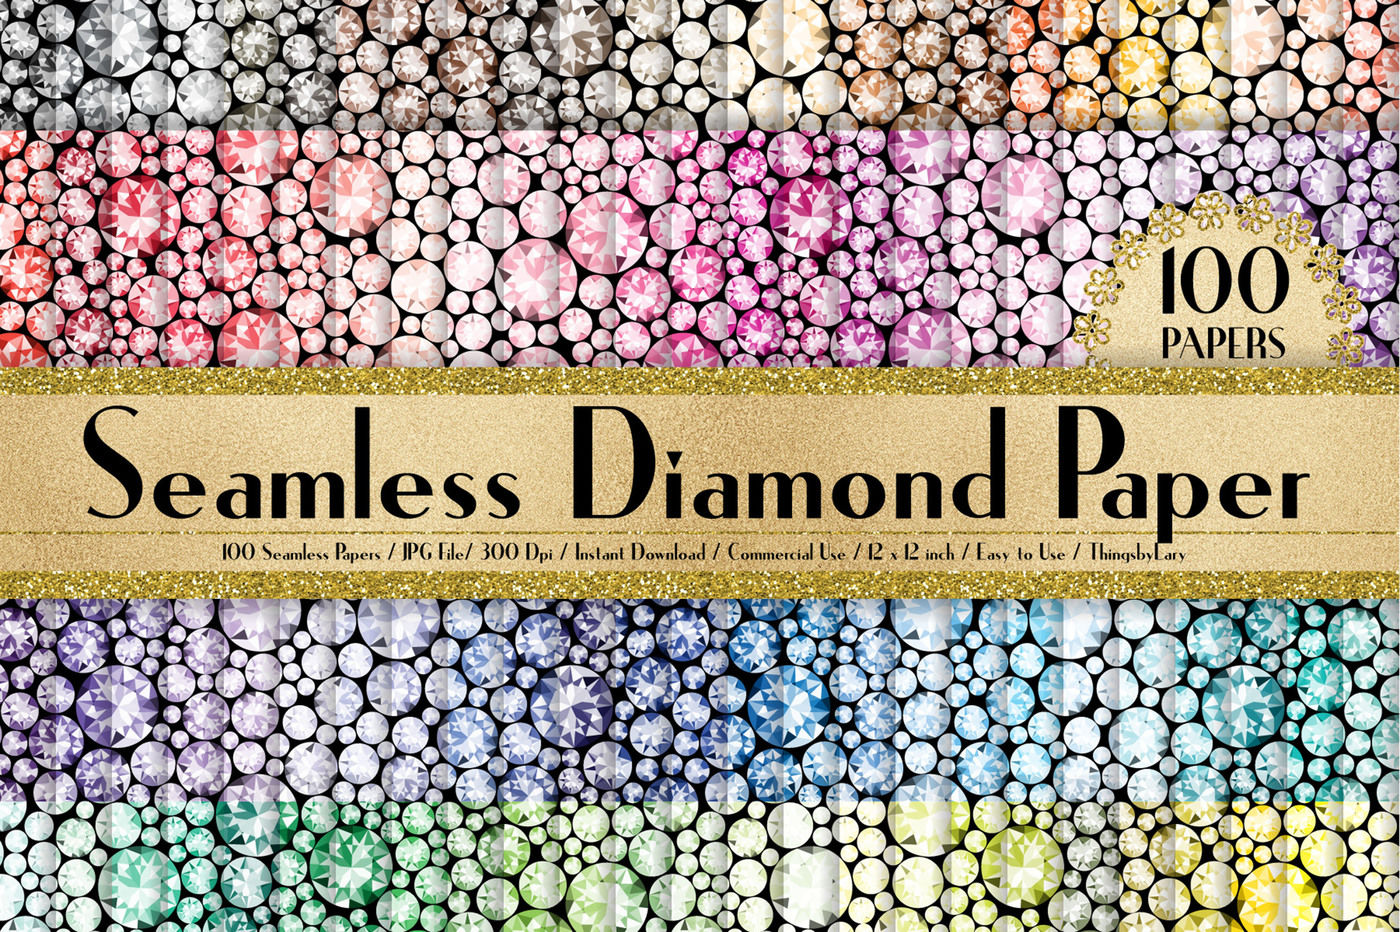 100 Seamless Diamond Pattern Digital Papers 12 X 12 Inch By Artinsider Thehungryjpeg Com